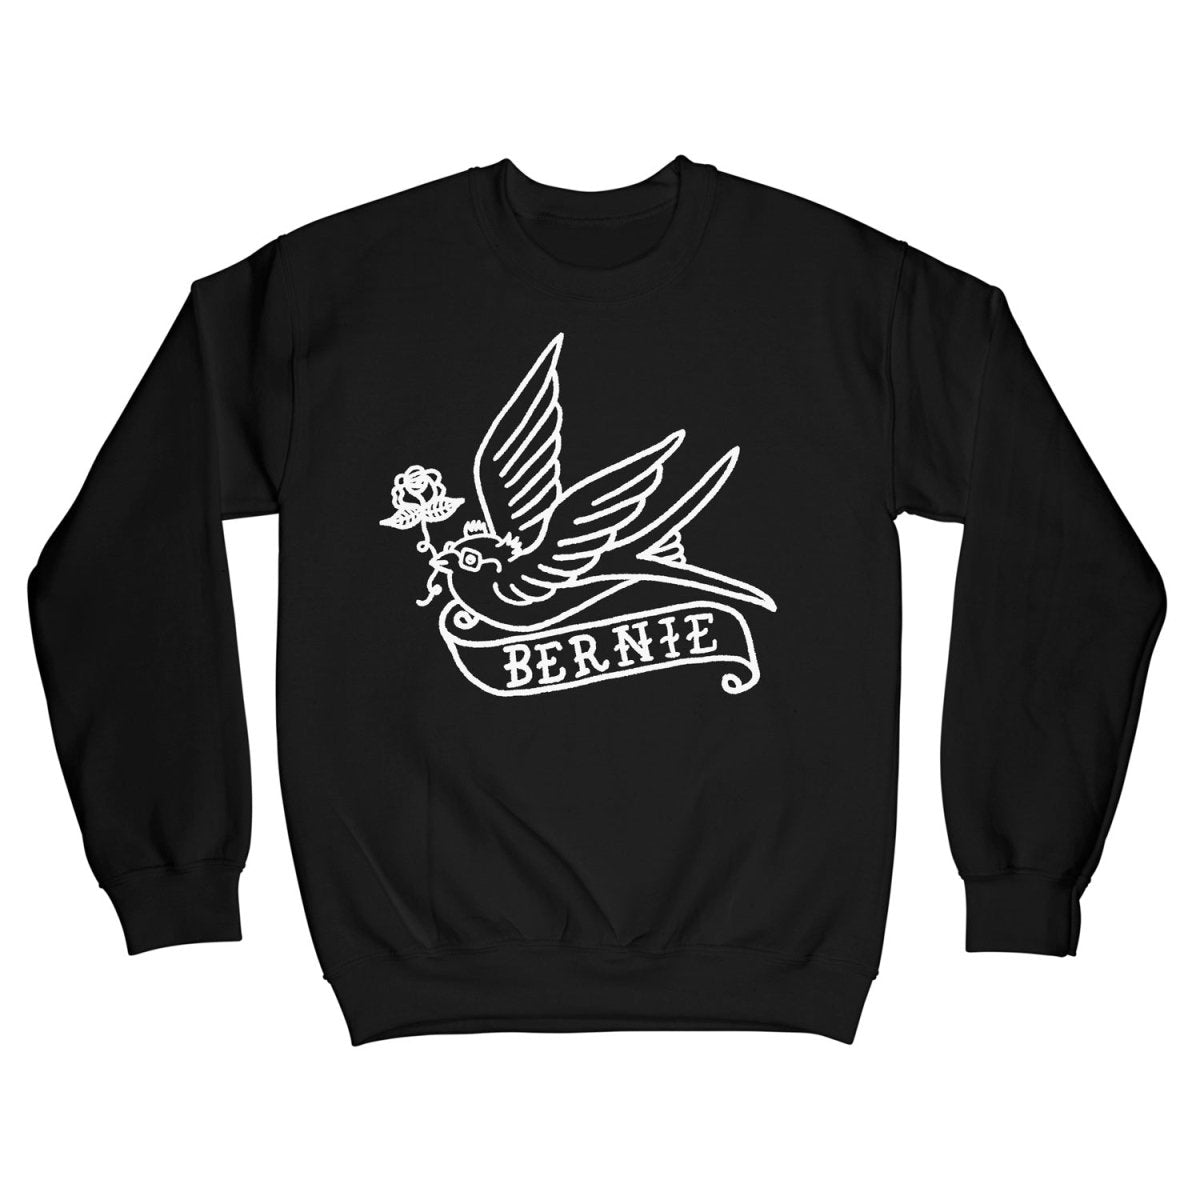 Bernie Bird Sweatshirt - Sweatshirt - Pretty Bad Co.